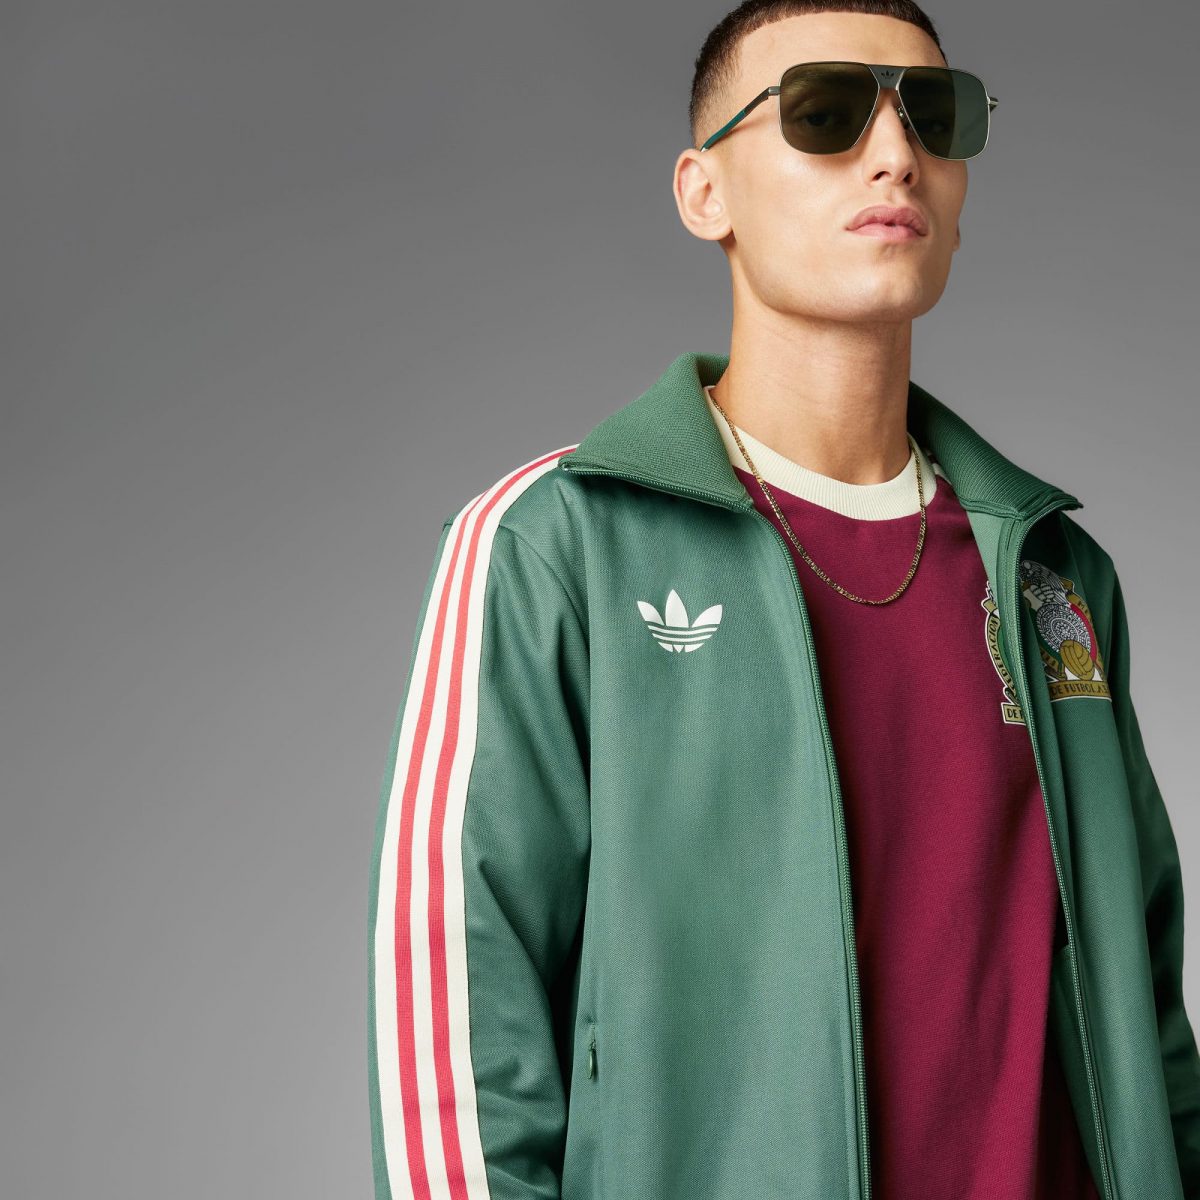 Мужская куртка adidas MEXICO BECKENBAUER TRACK TOP